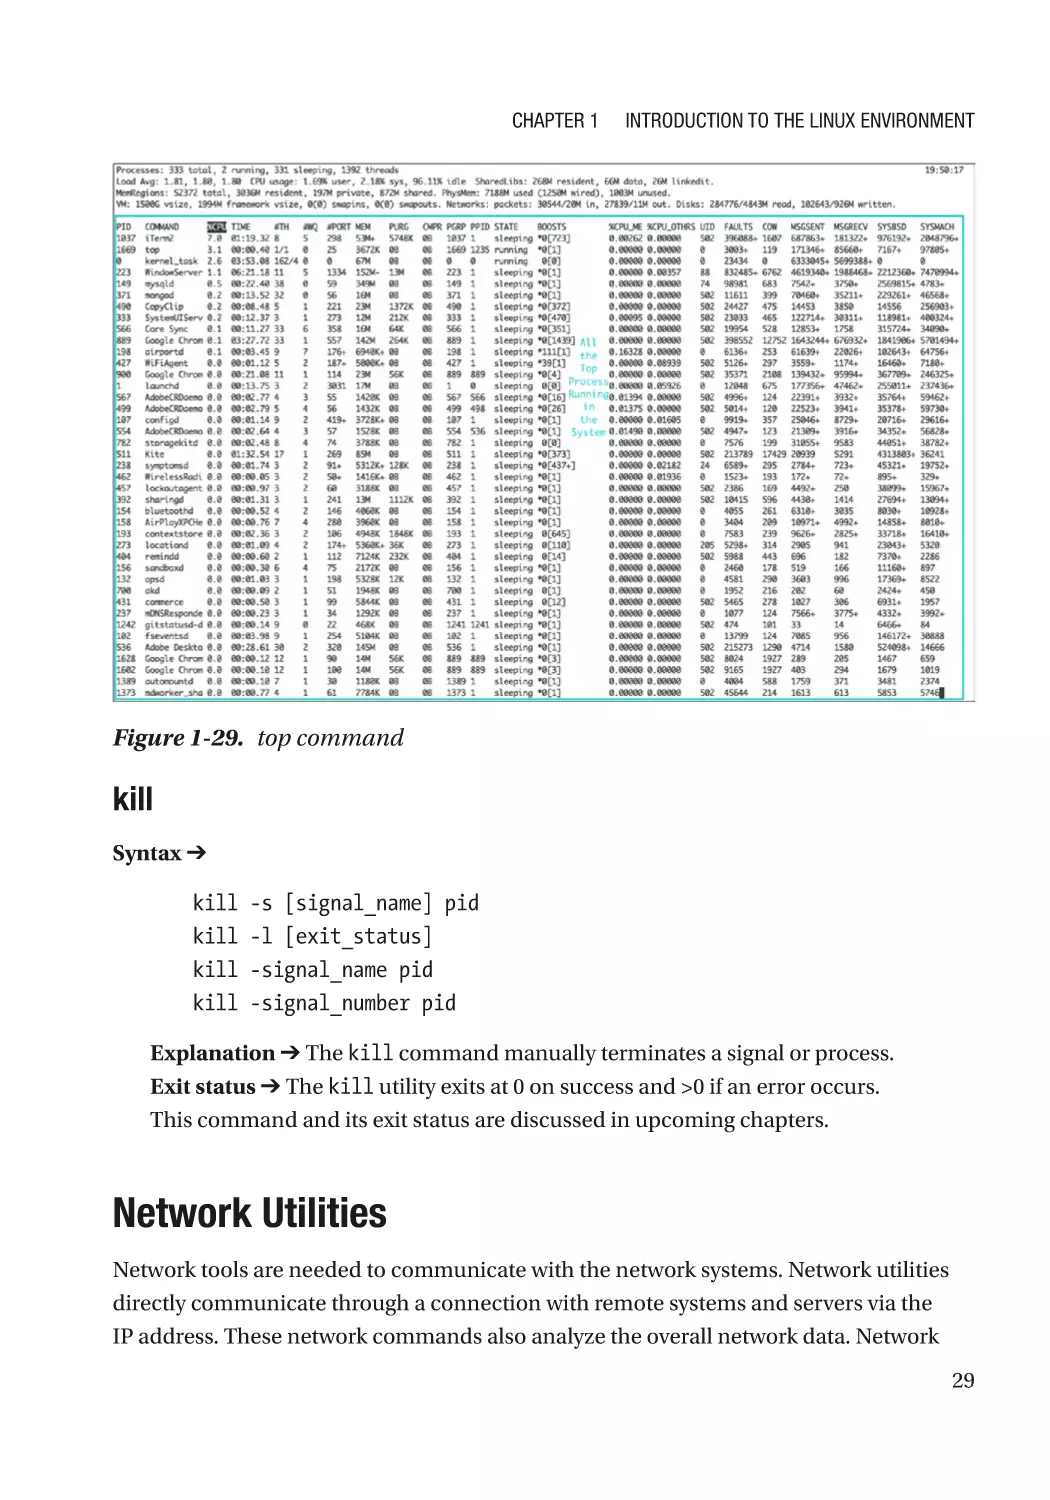 kill
Network Utilities